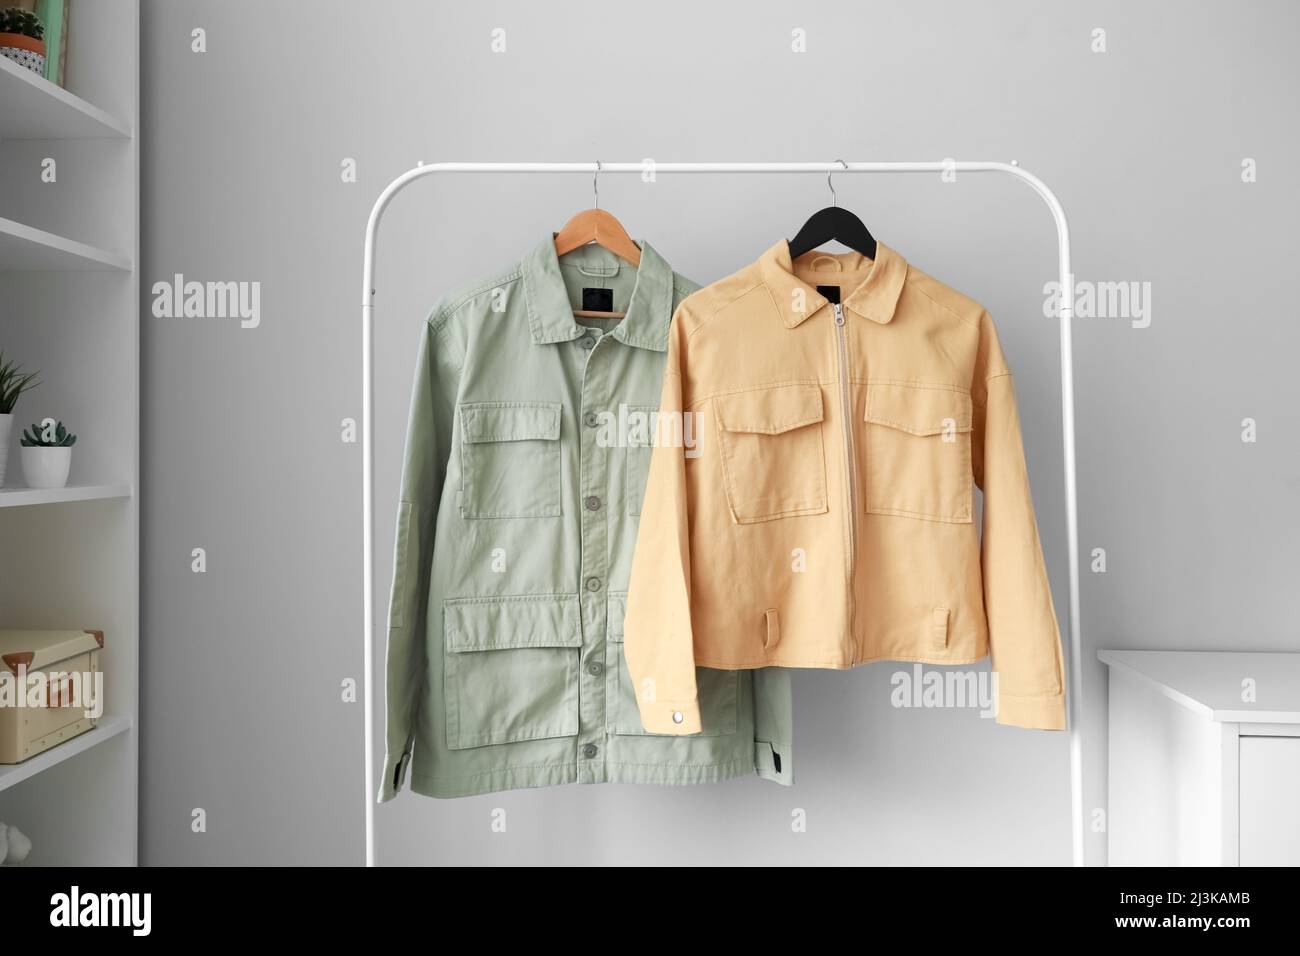 Rack with stylish jackets near light wall in room Stock Photo